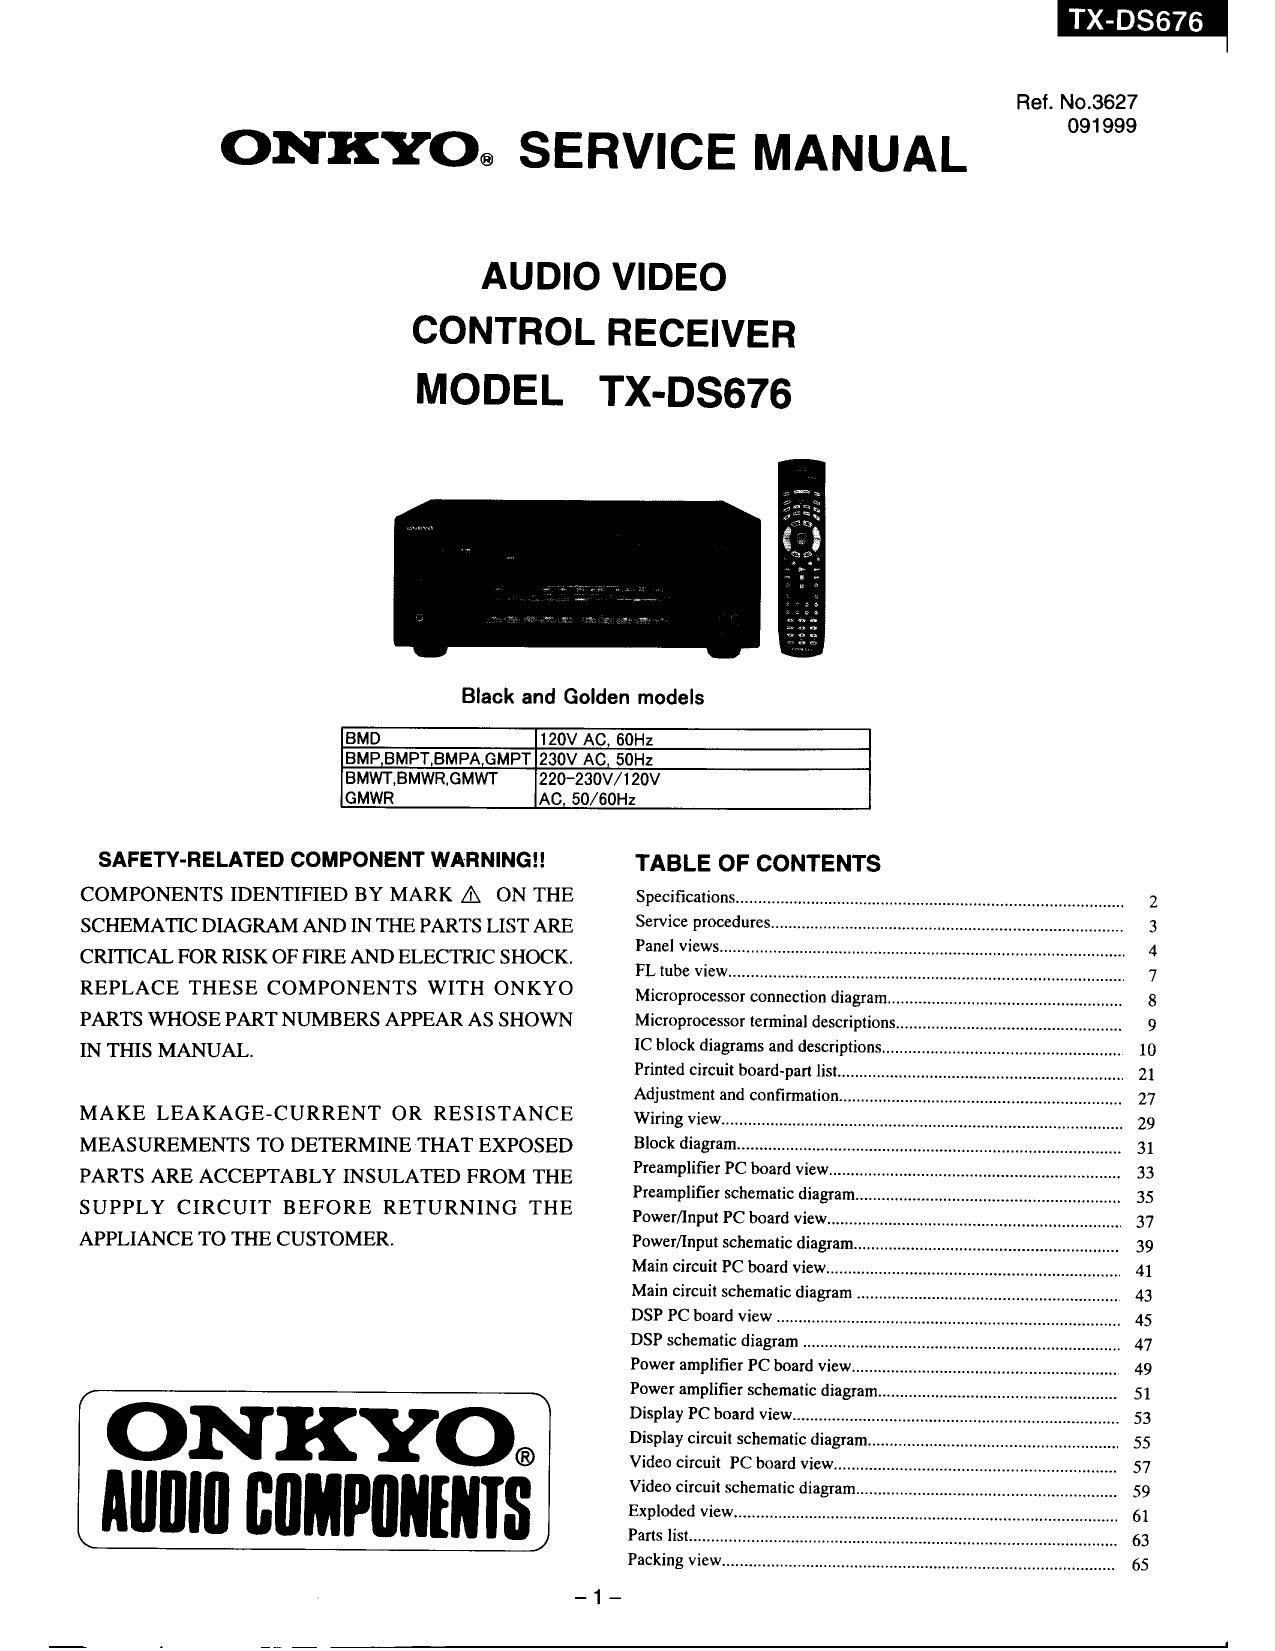 Onkyo TXDS 676 Service Manual